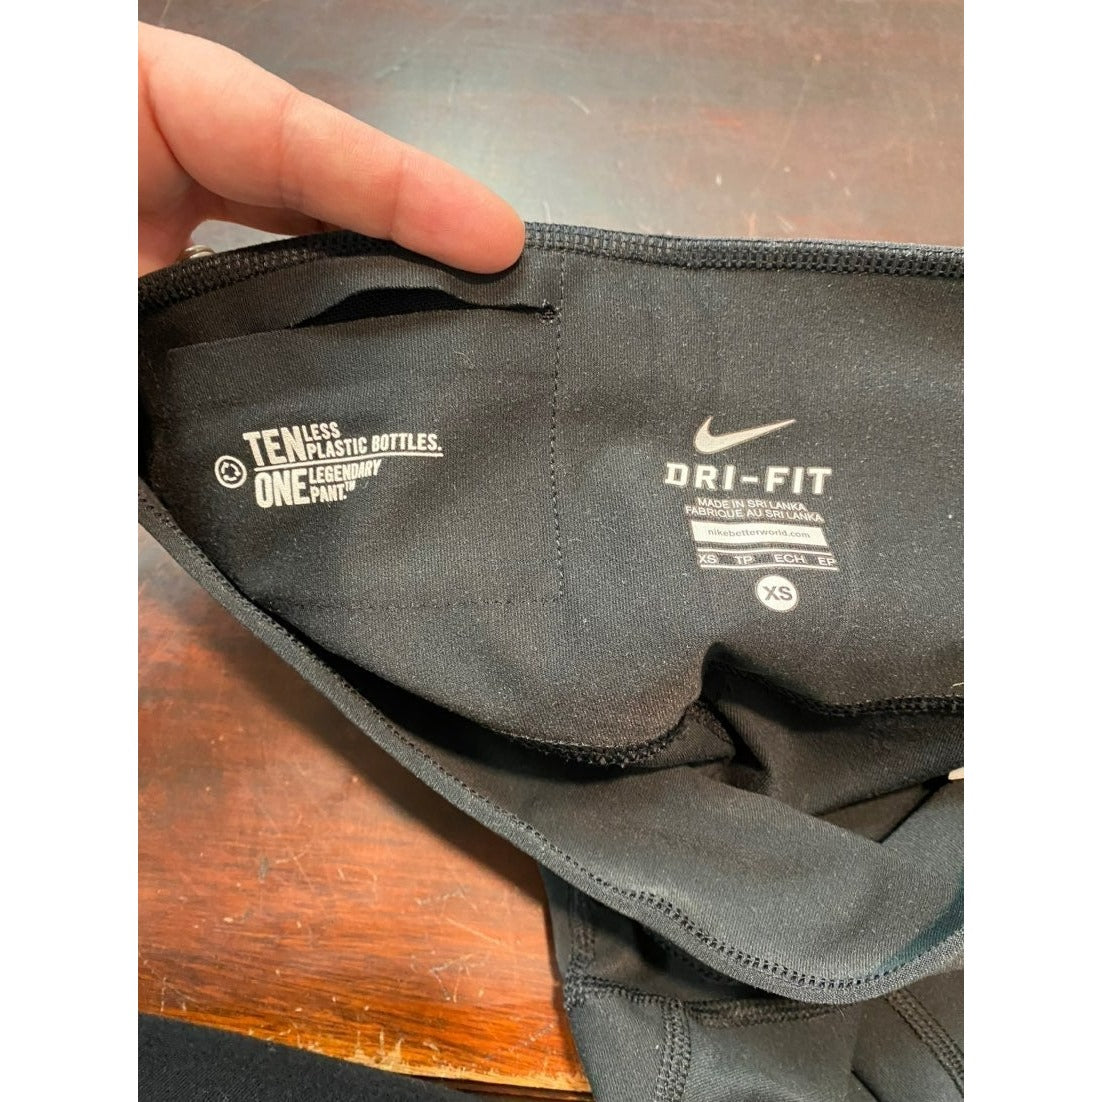 Nike XS dri-fit yoga Pants leggings